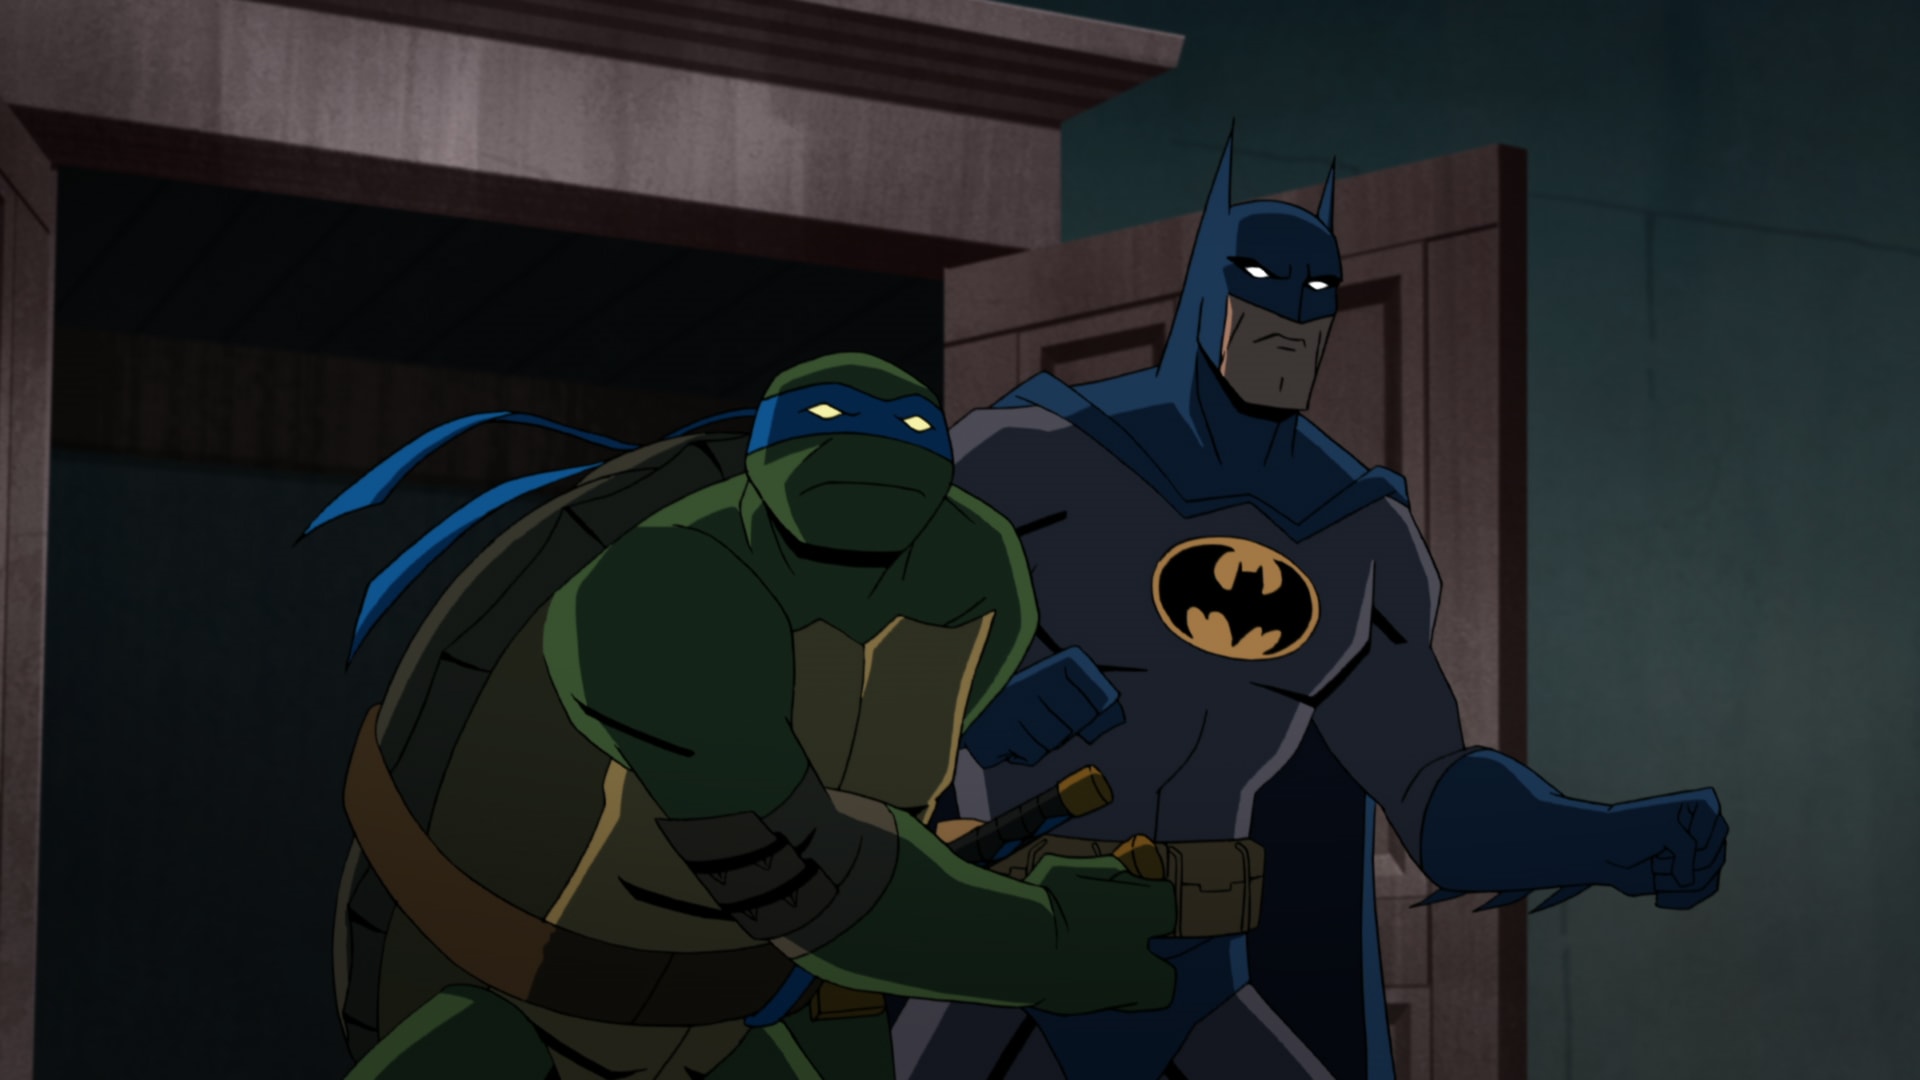 Batman Vs. Teenage Mutant Ninja Turtles 4K Blu-ray